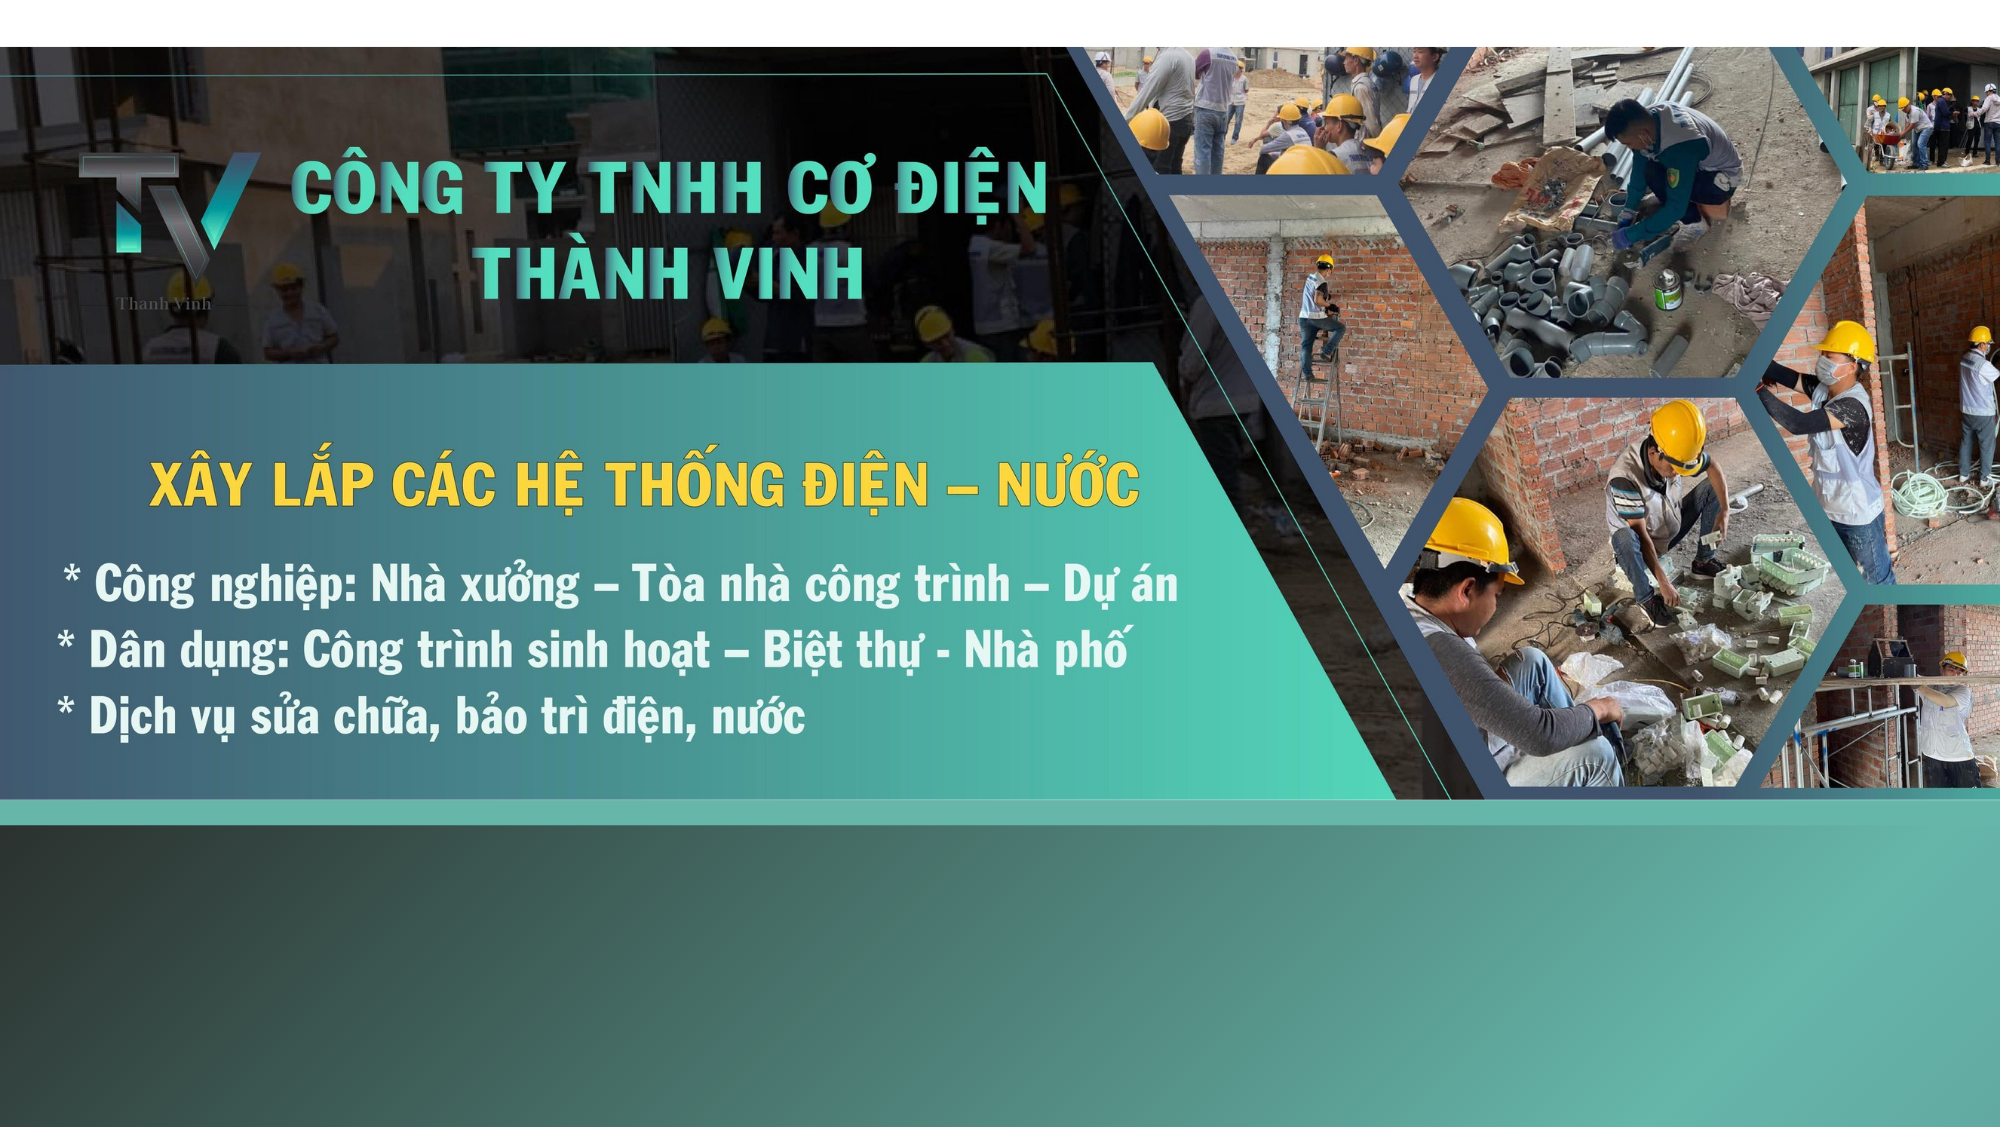 THANH VINH COMPANY